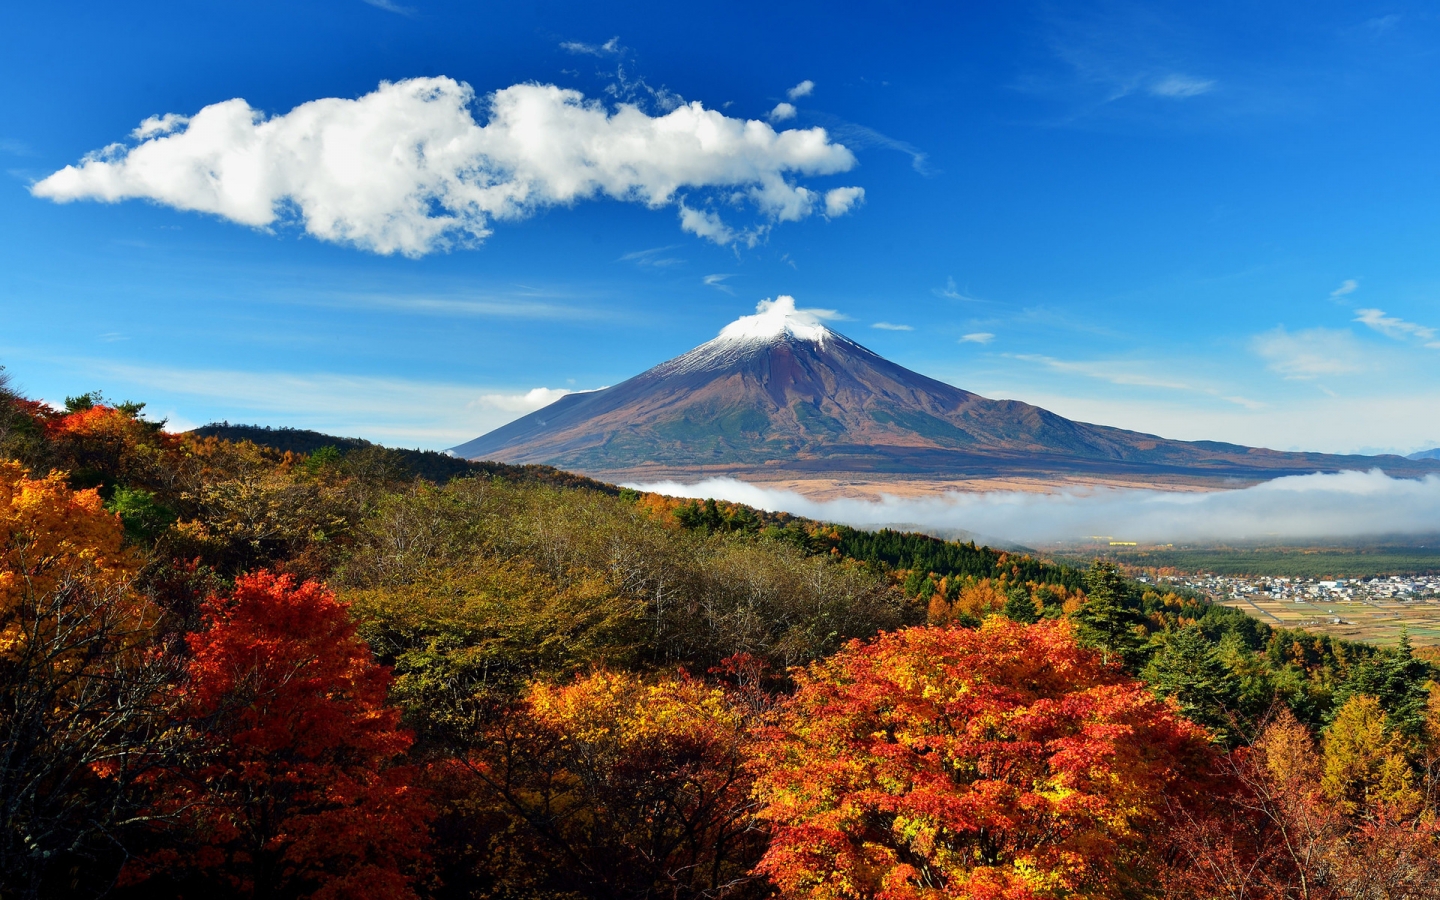 Mount Fuji Japan for 1440 x 900 widescreen resolution